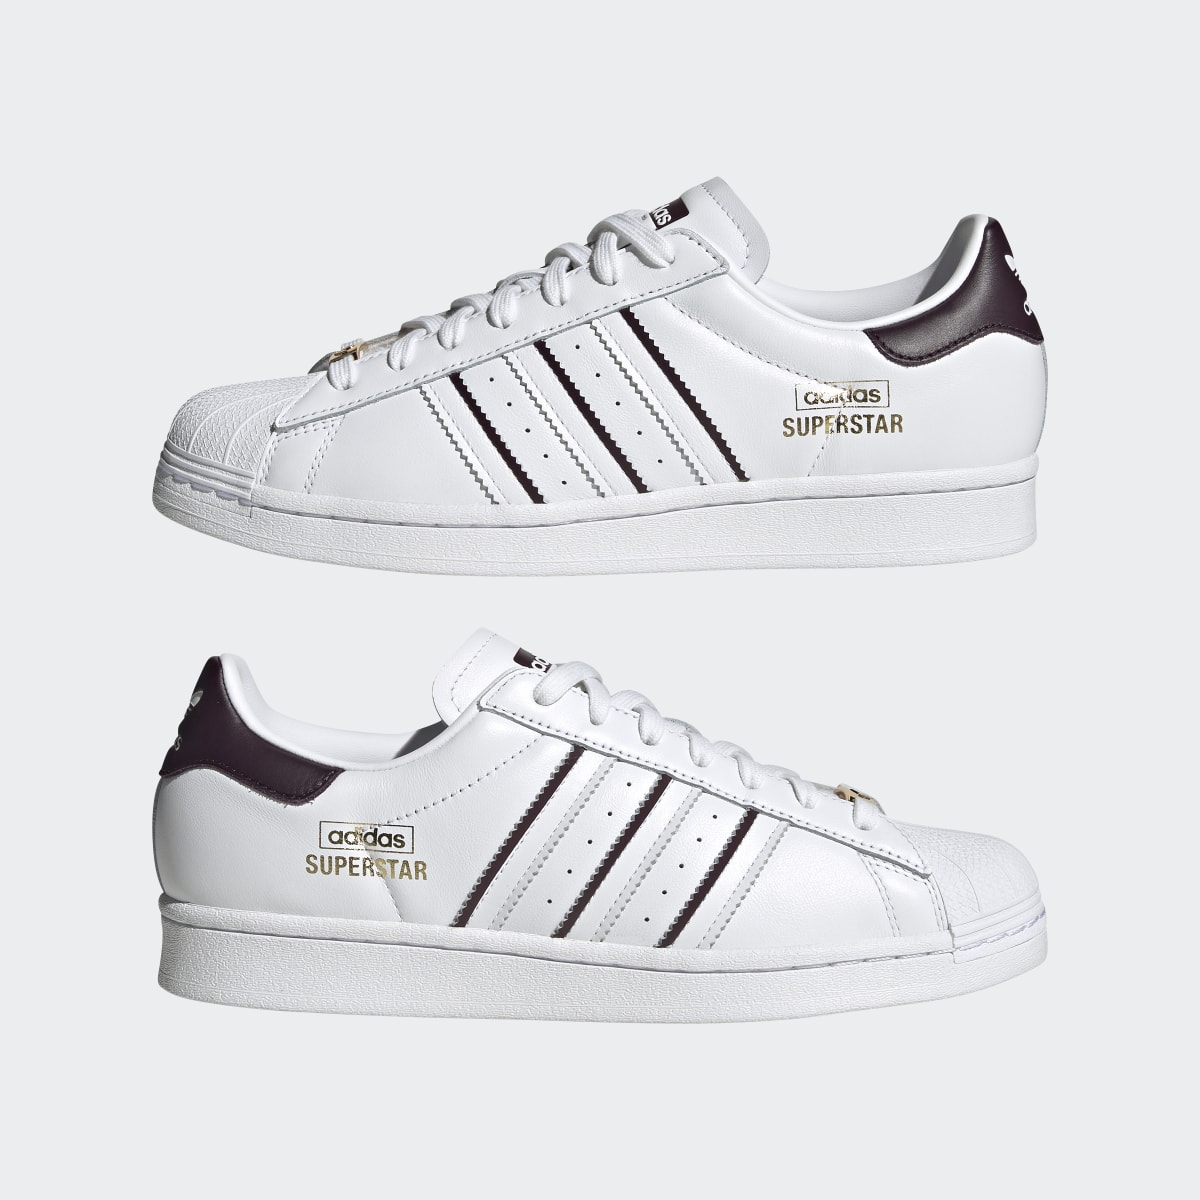 Adidas Superstar Shoes. 8